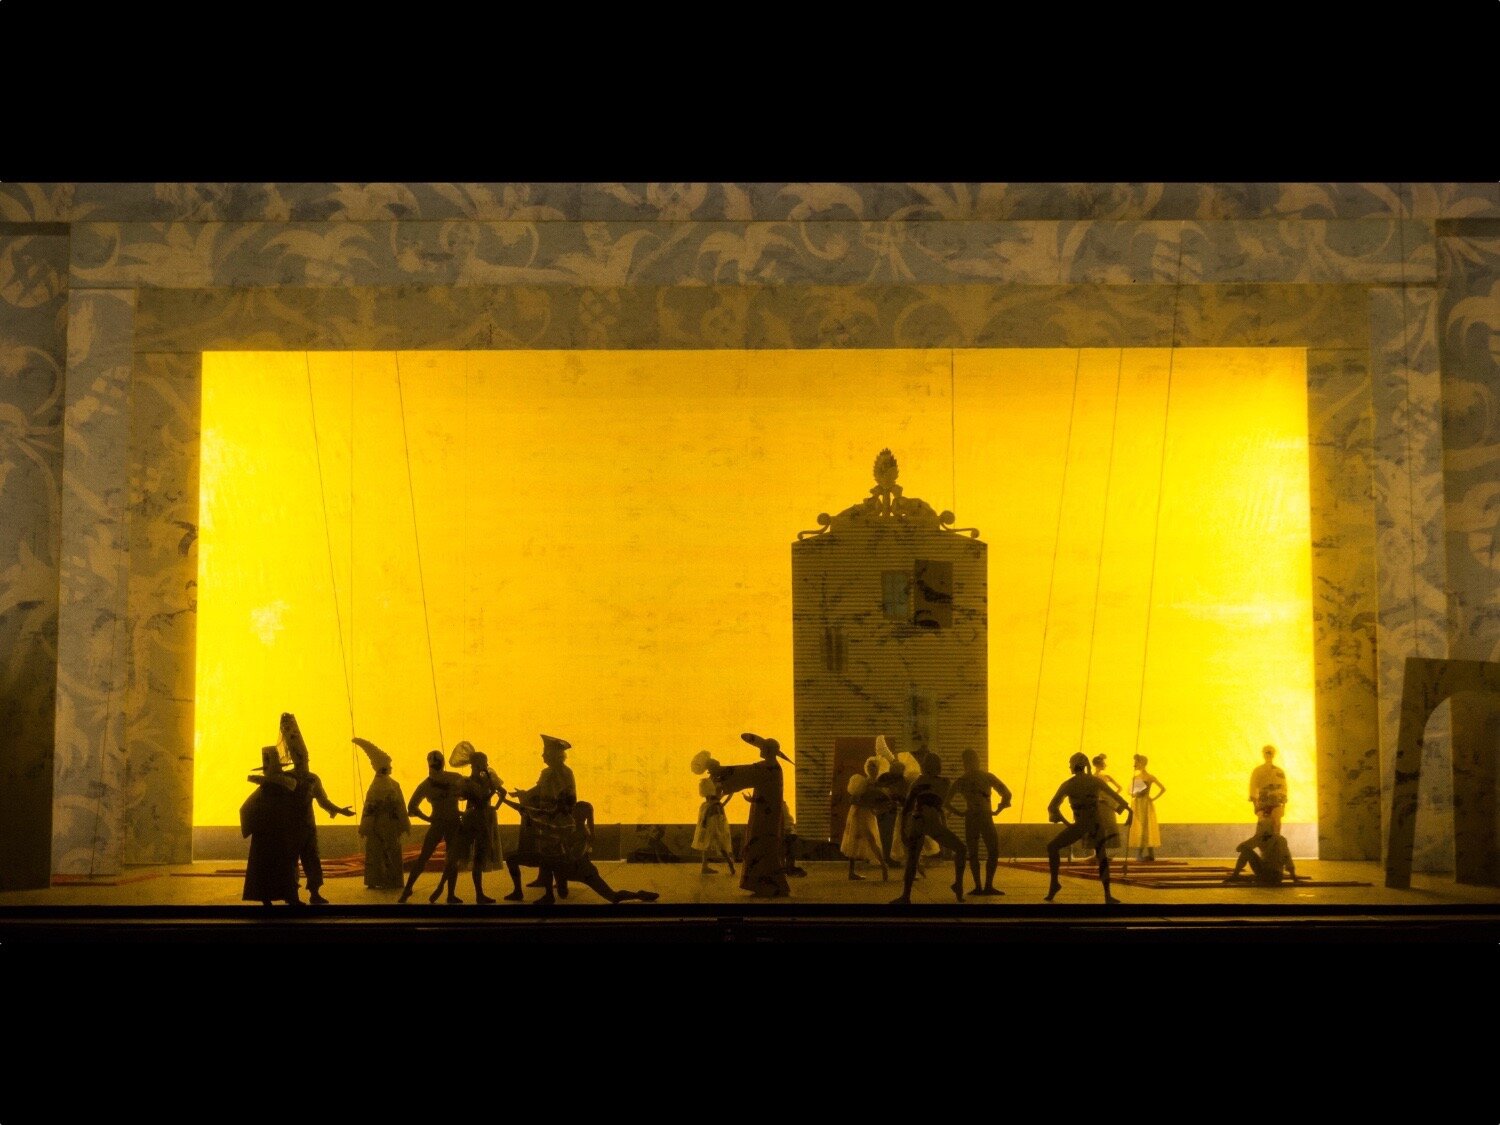  Don Quixotea ballet choreographed by Mikhail BaryshnikovTeatro dell'Opera, Rome, 2017
© photo by Yasuko Kageyama 